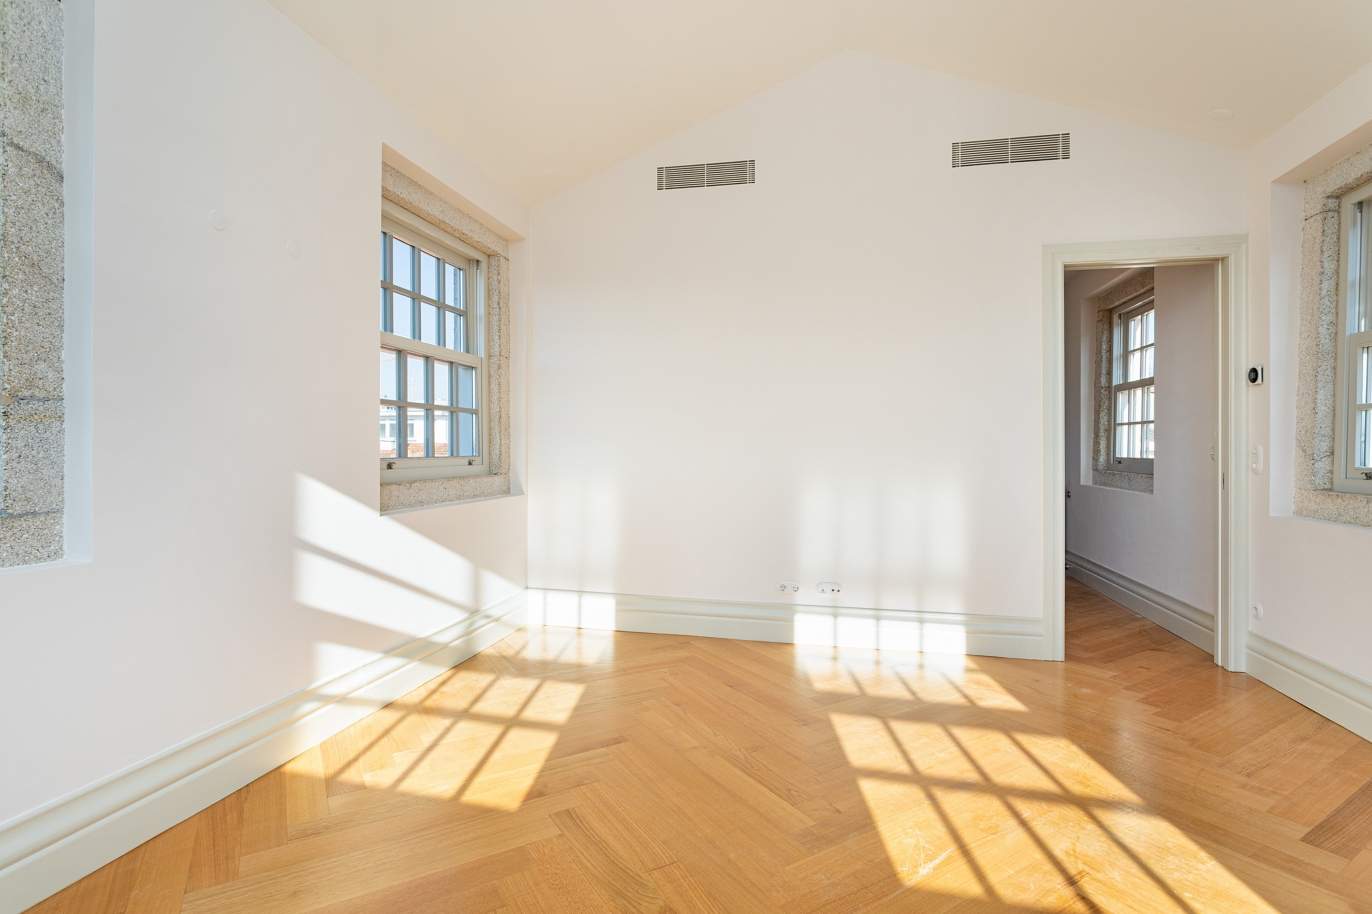 Venda apartamento duplex novo, empreendimento de luxo, Cedofeita, Porto_165744